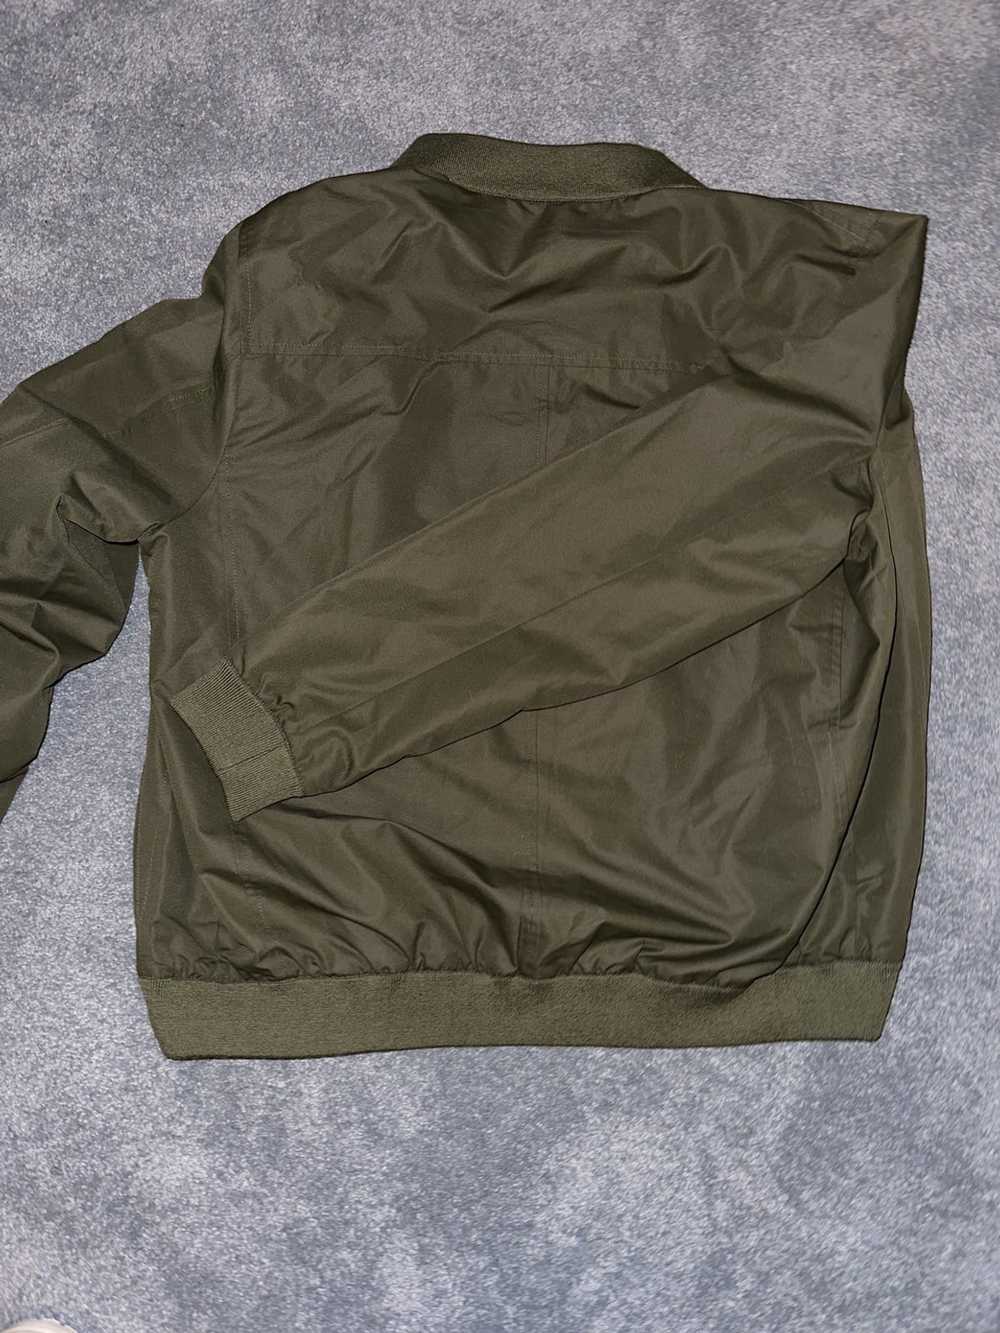 Michael Kors Michael Kors Olive Bomber Jacket - image 3